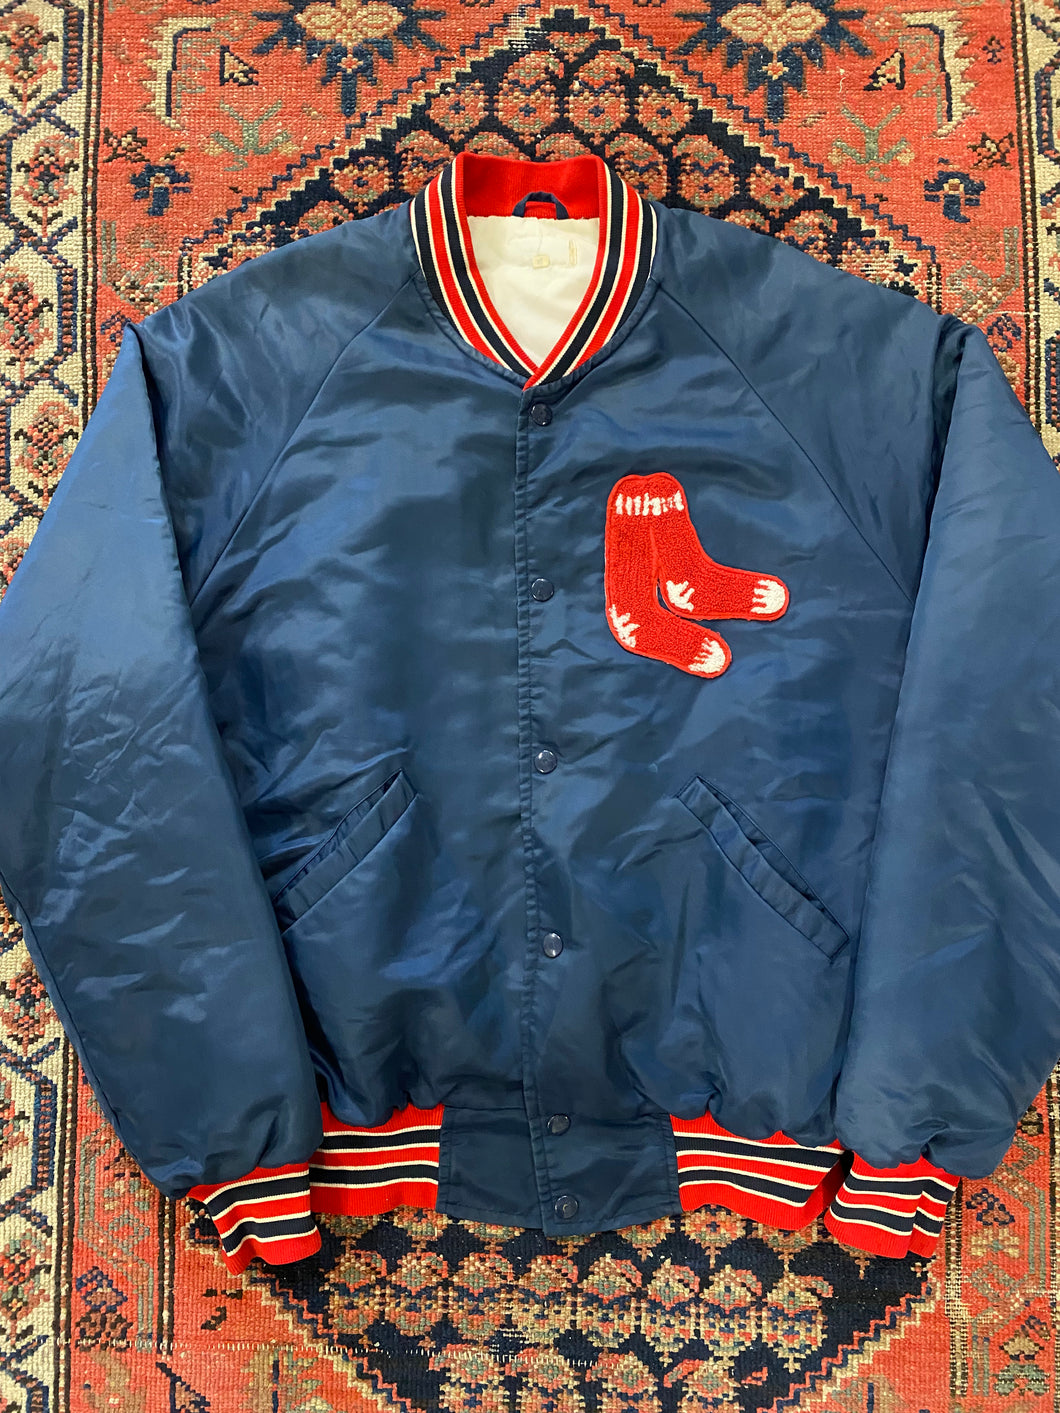 Vintage Boston Red Sox’s Jacket - XL